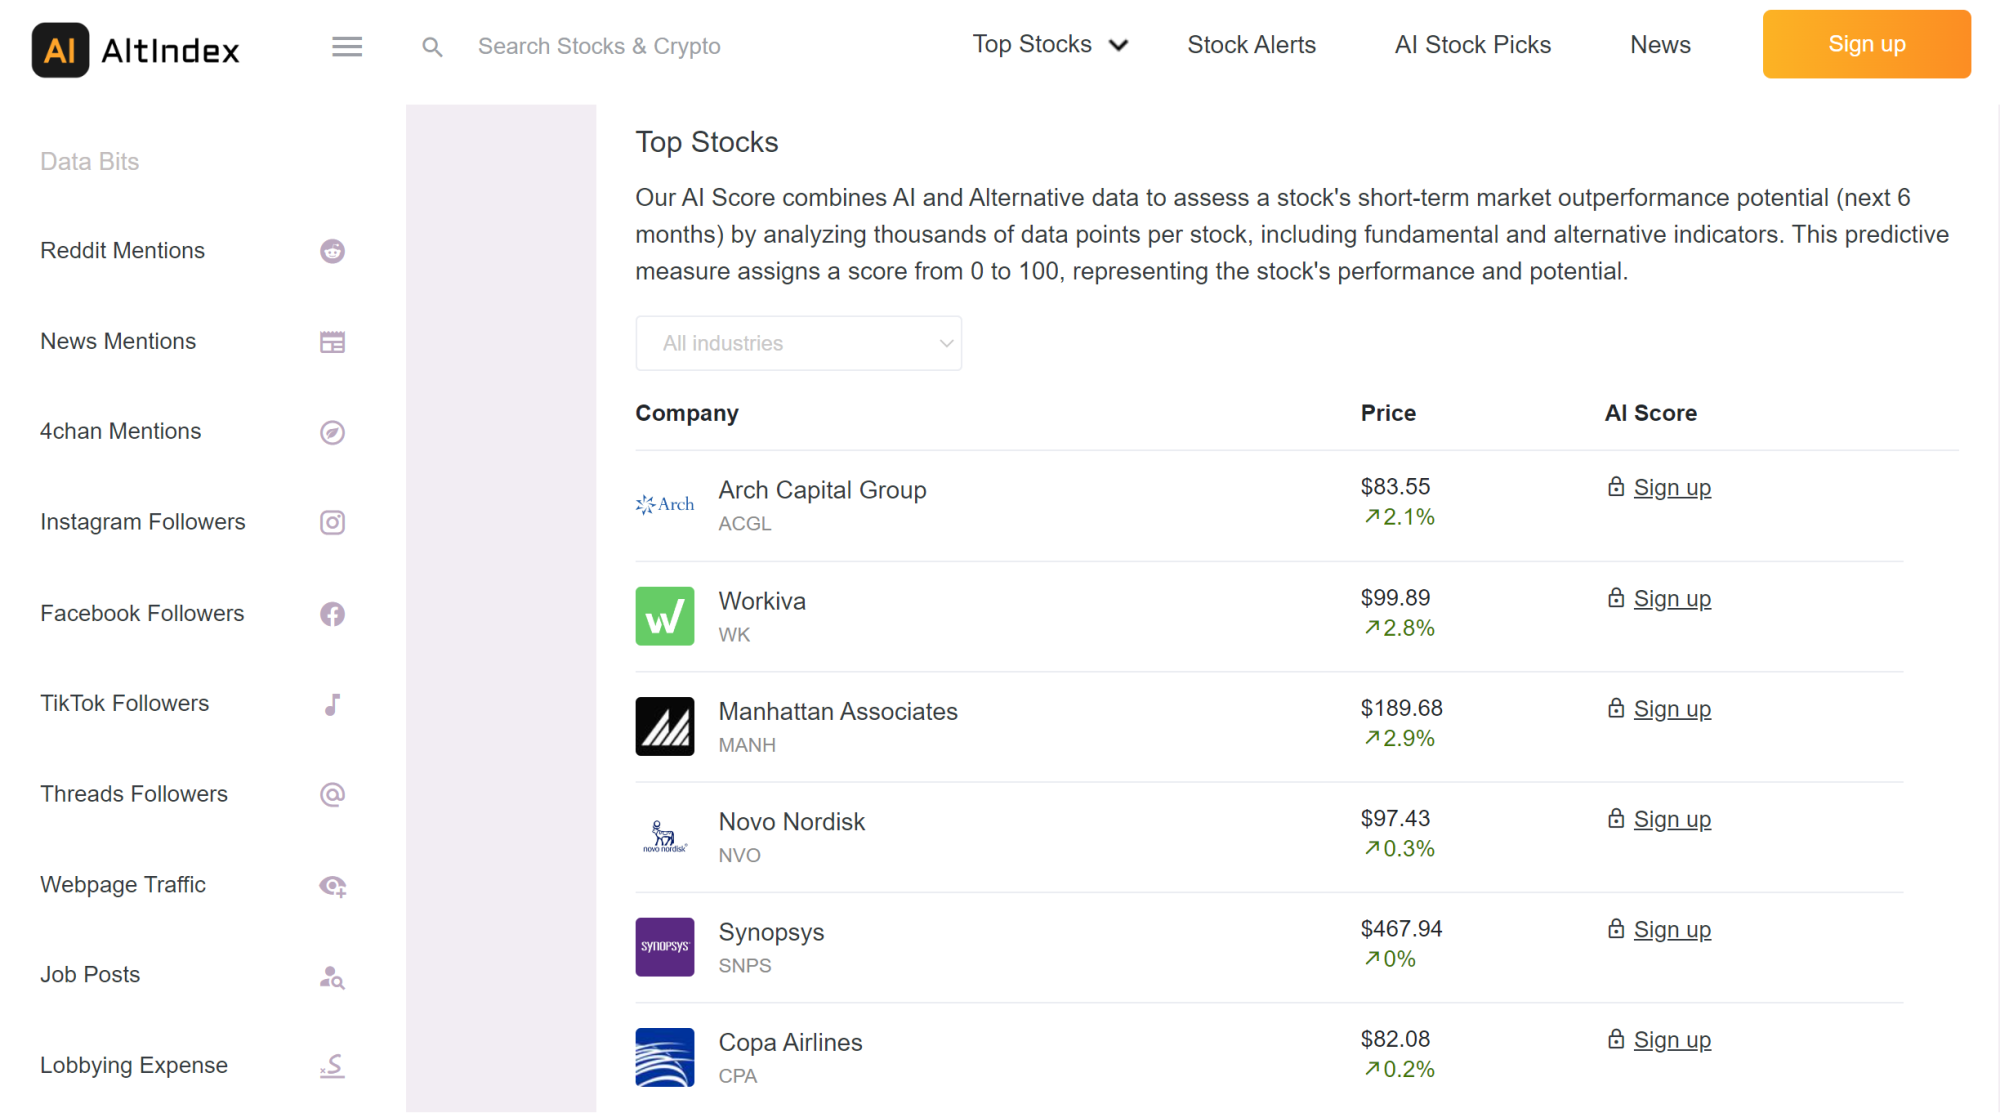 AltIndex Top Stocks list